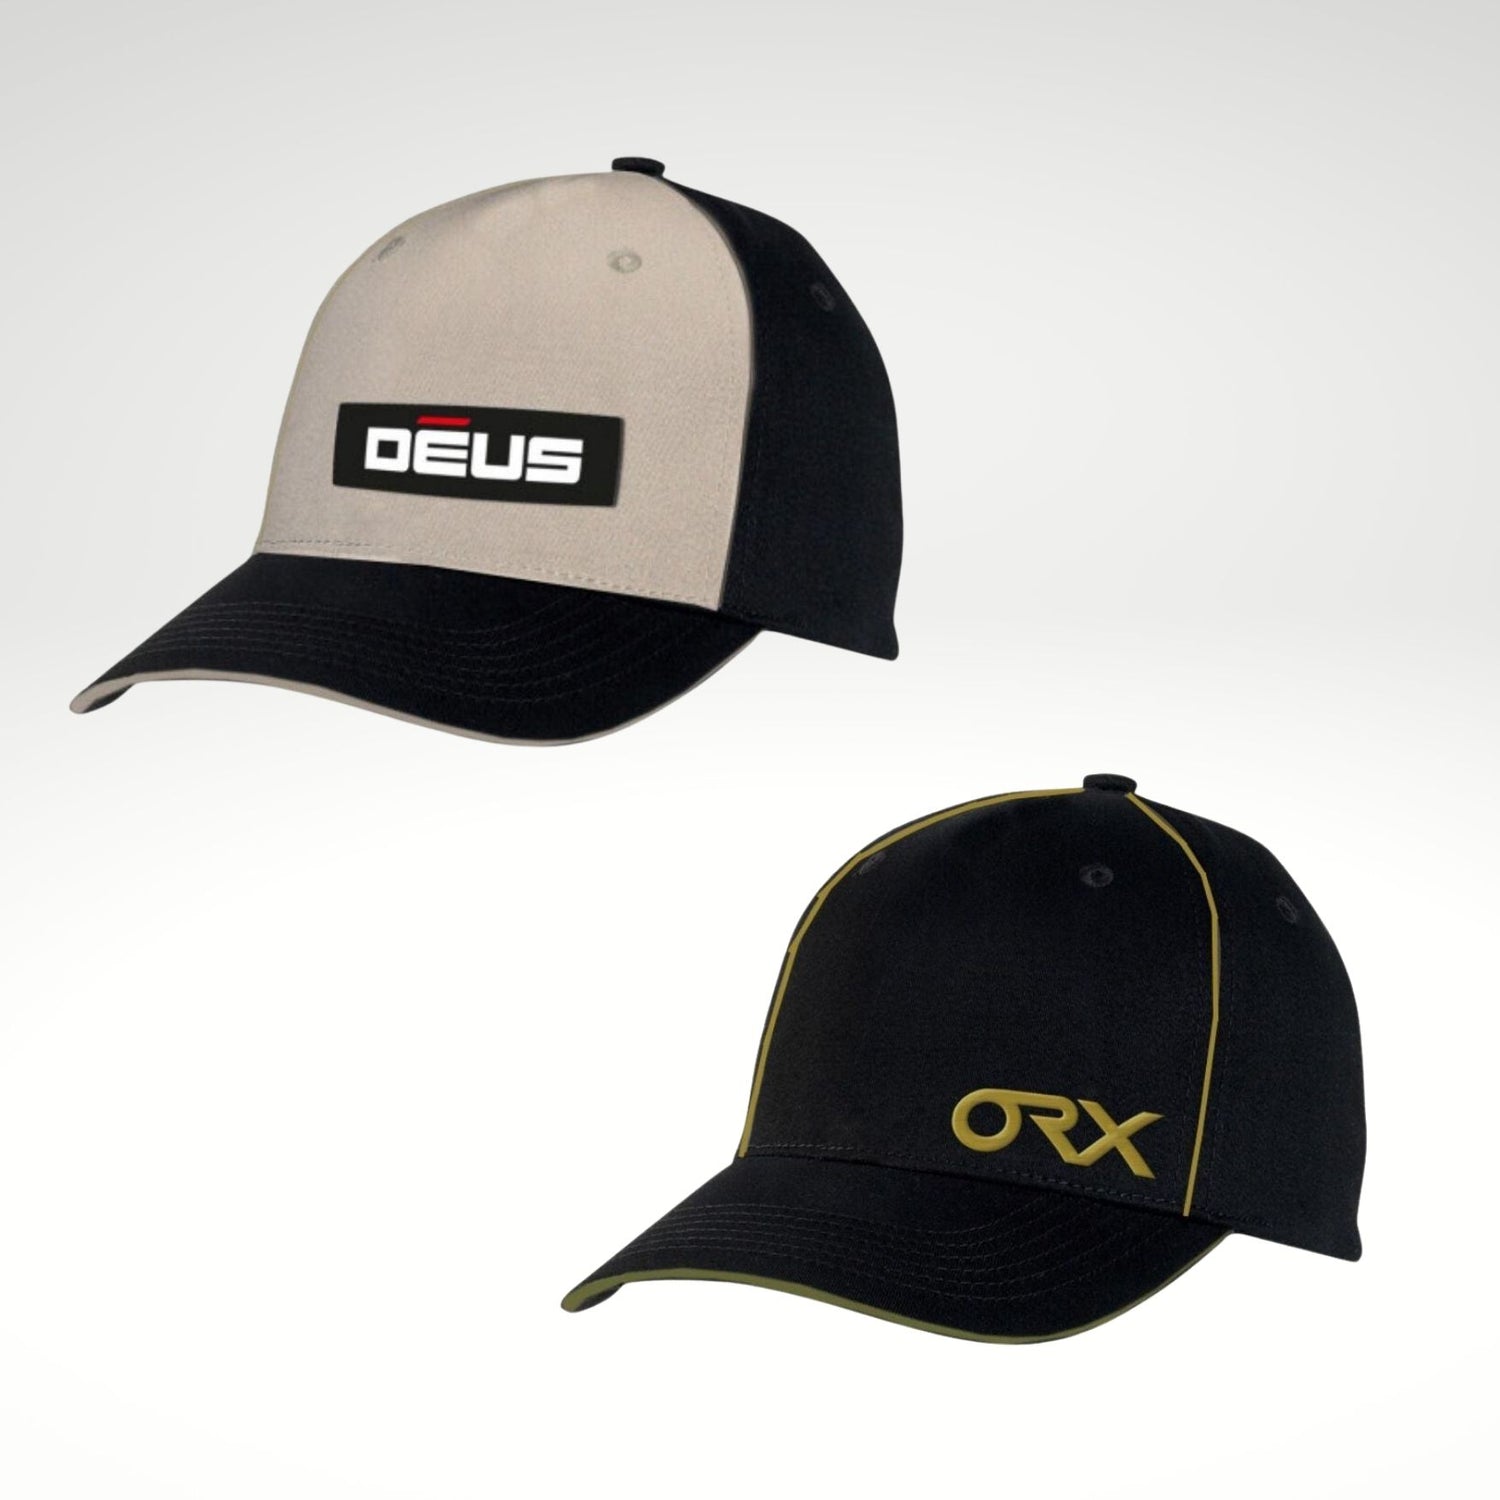 XP DEUS and ORX Caps